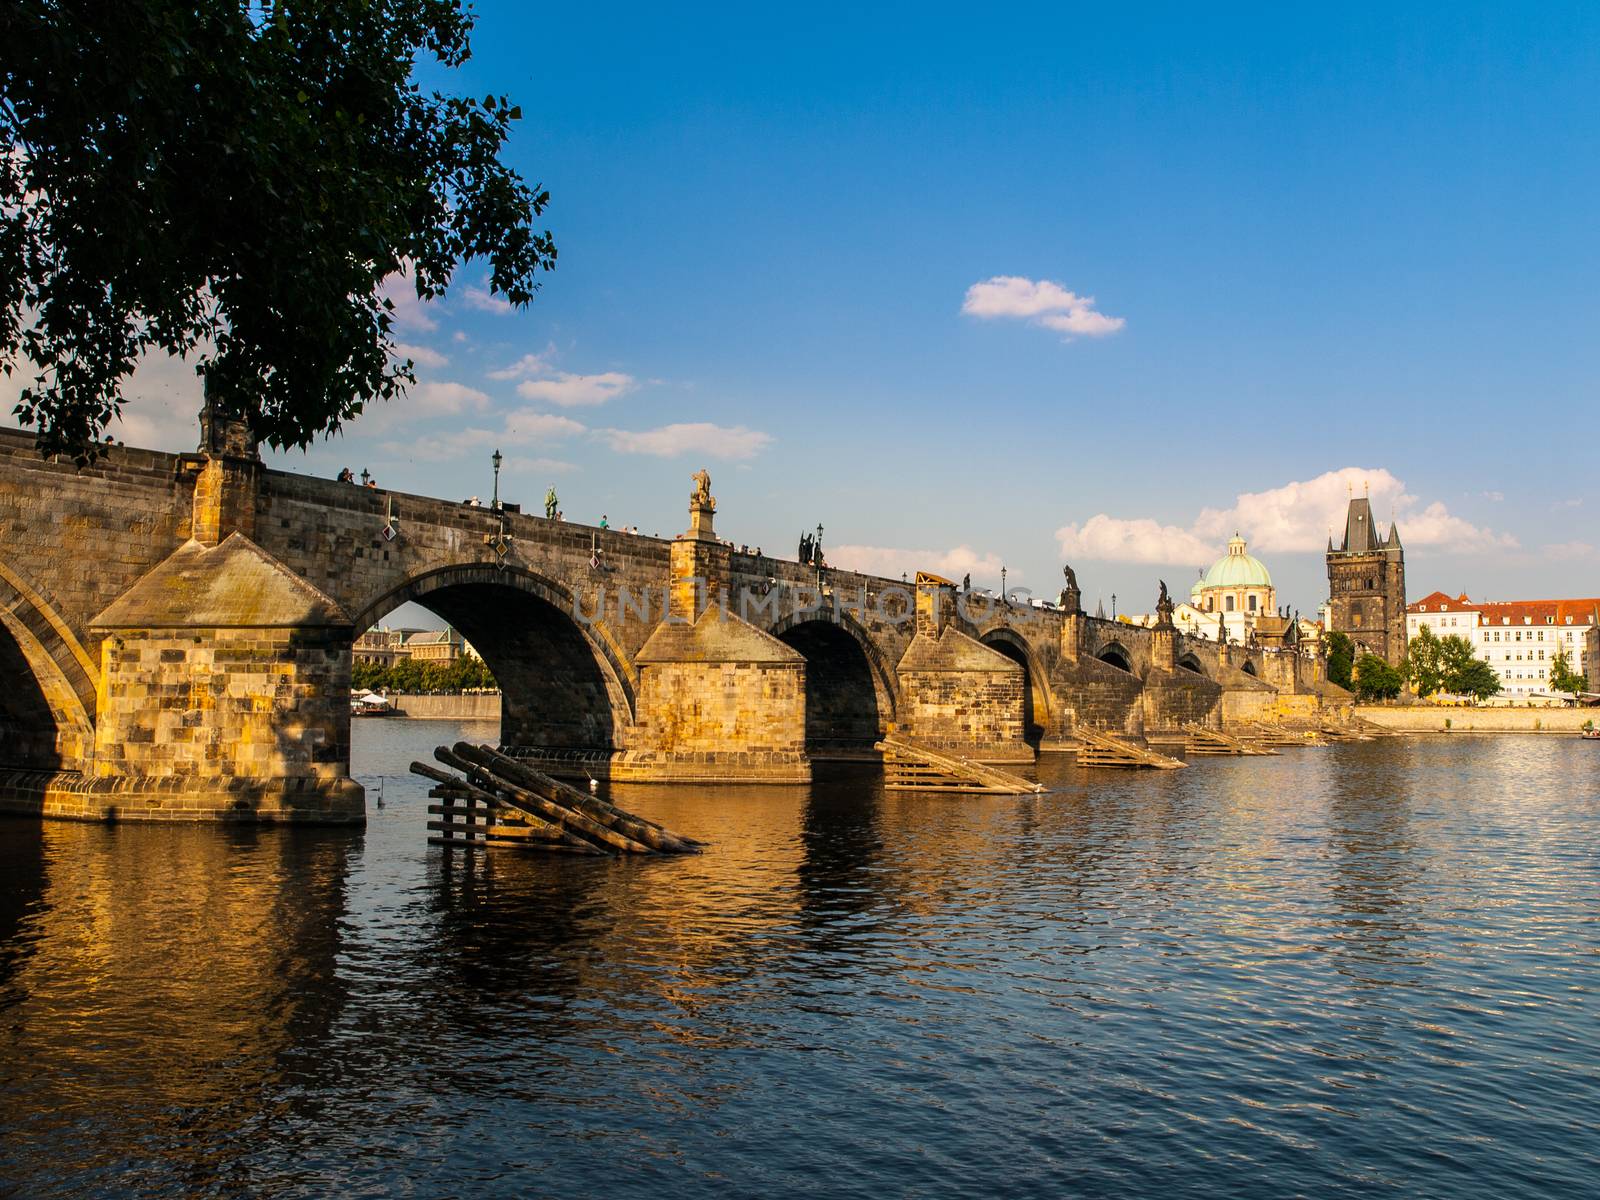 Charles Bridge and Old Town Bridge Tower in Prague (Czech Republic)